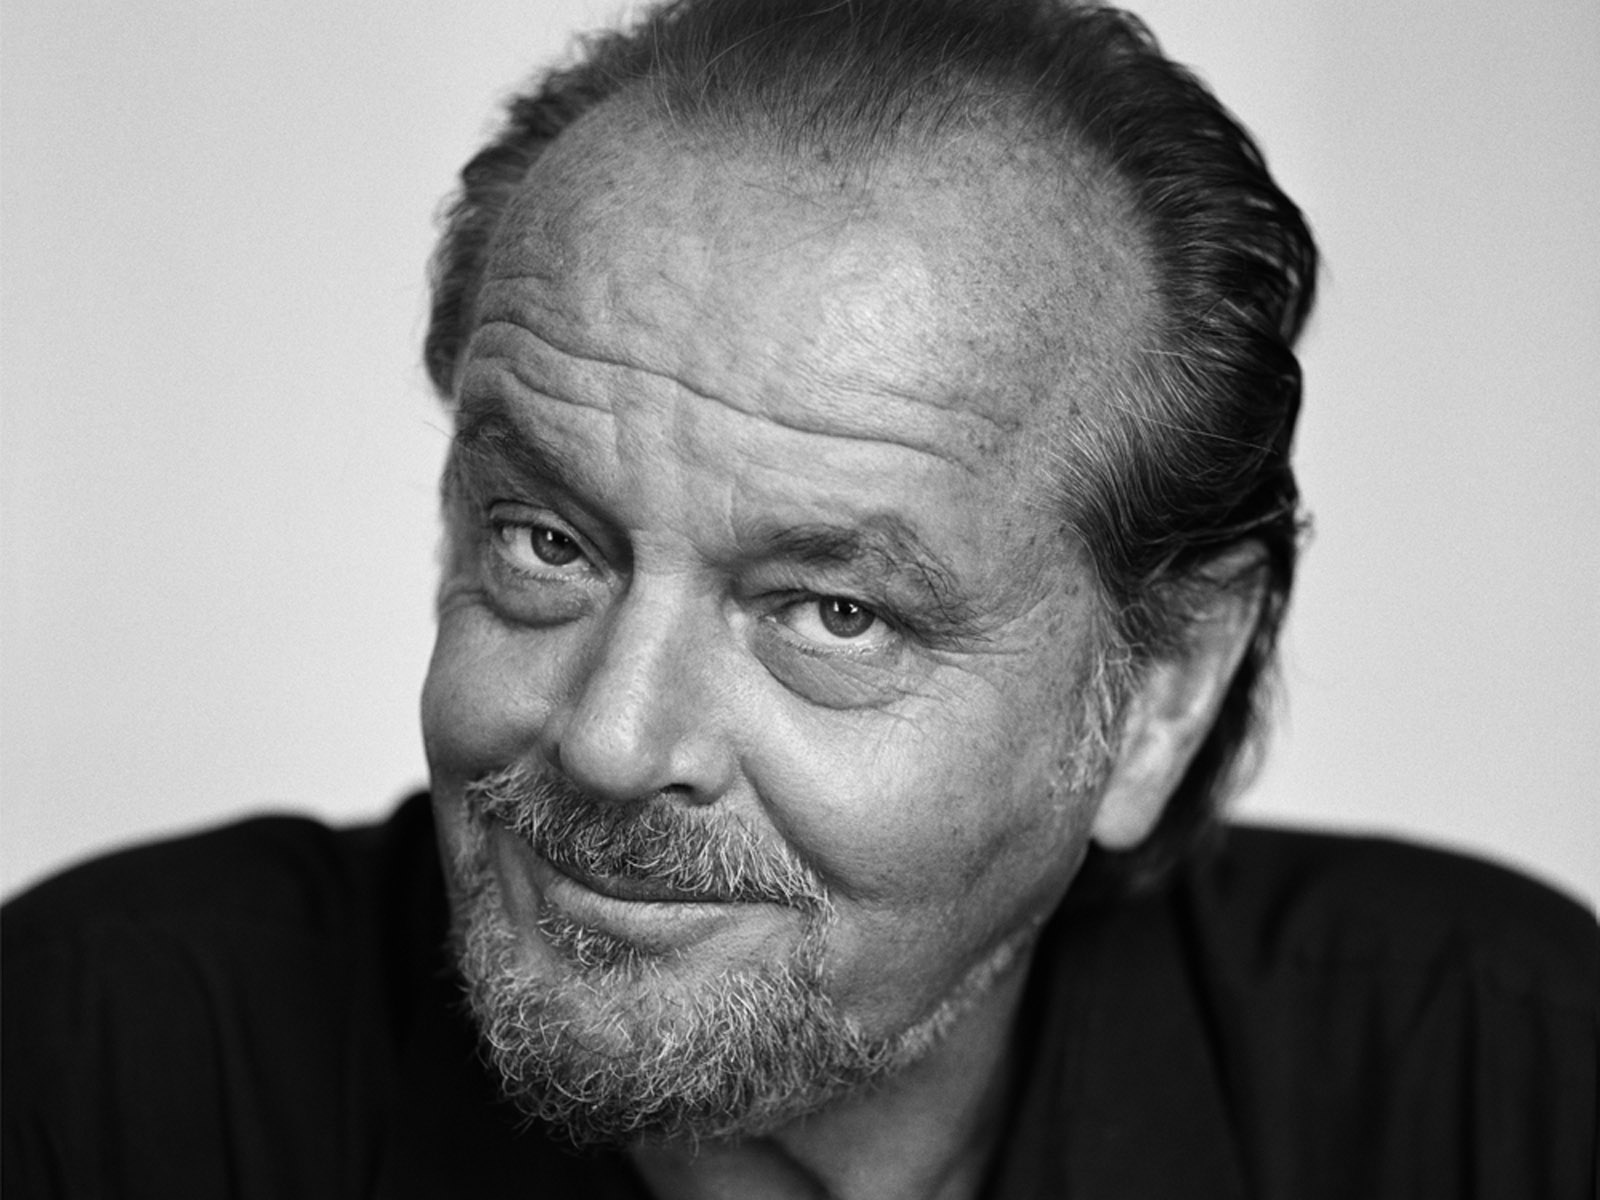 O Sr. Jack Nicholson viveu enganado